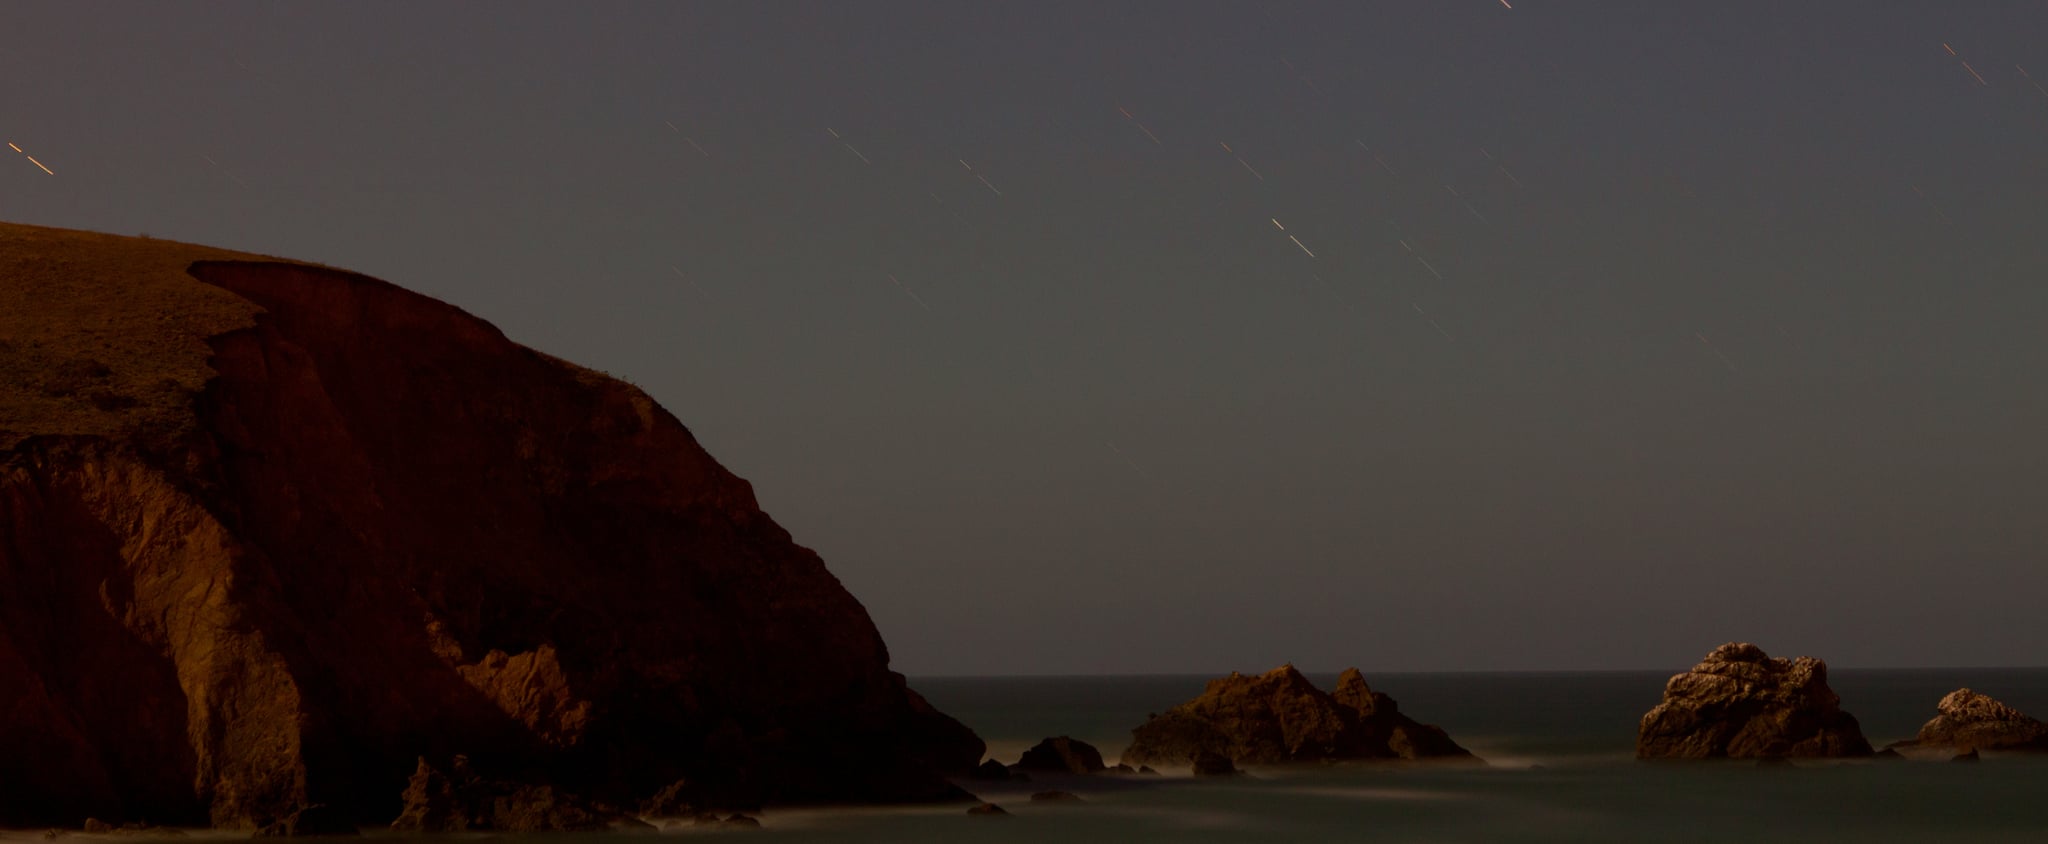 The Eta Aquarid Meteor Shower Peaks on May 5 and 6